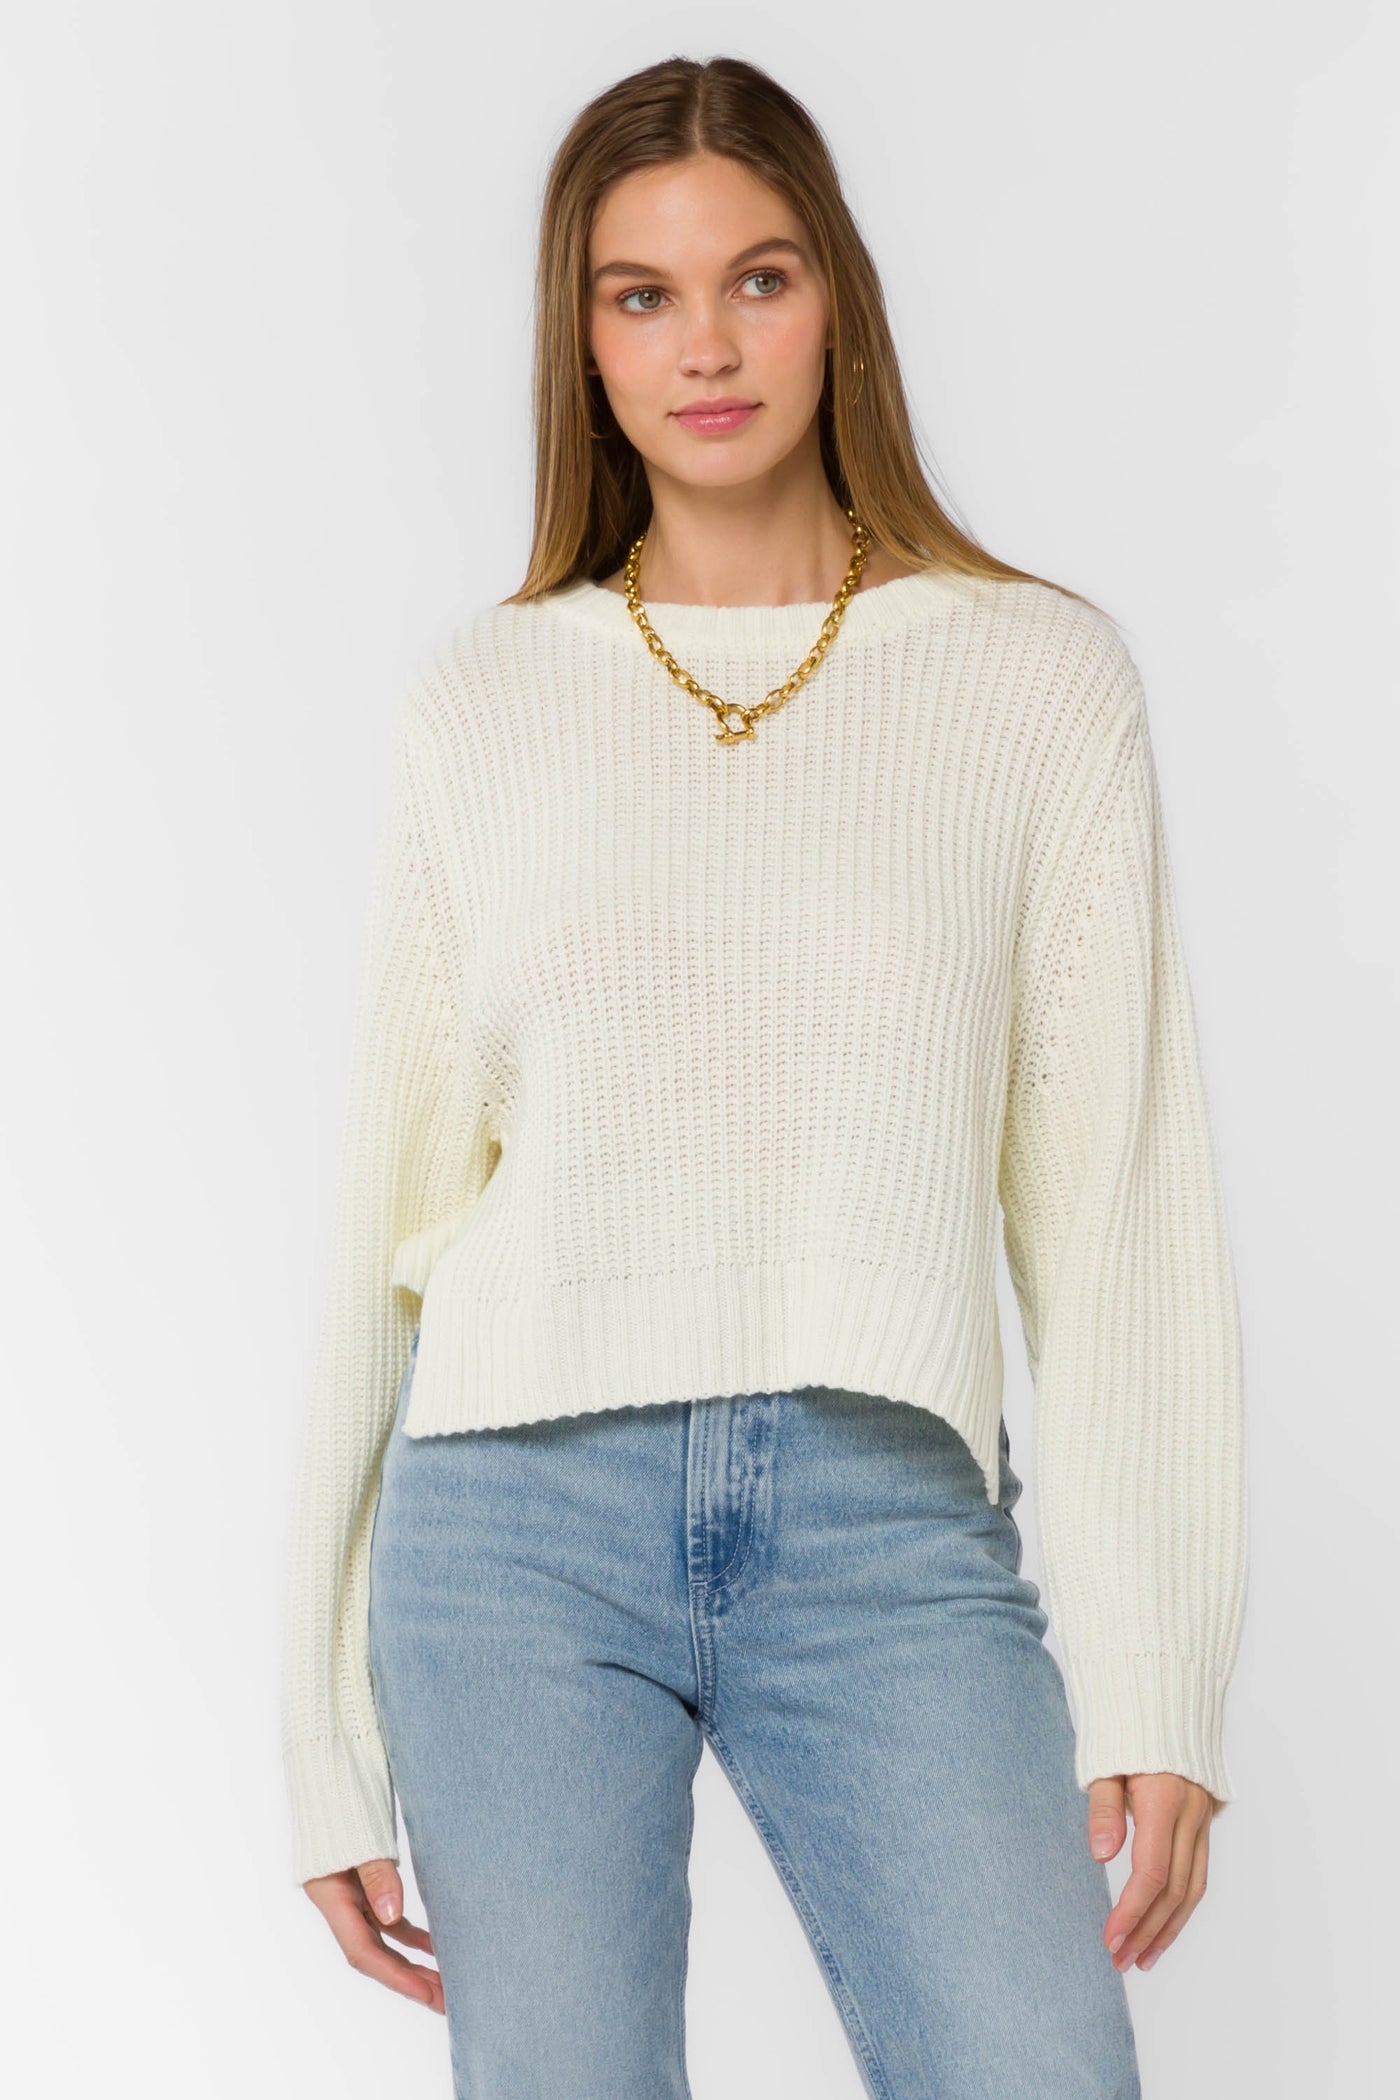 Korina Ivory Sweater - Sweaters - Velvet Heart Clothing